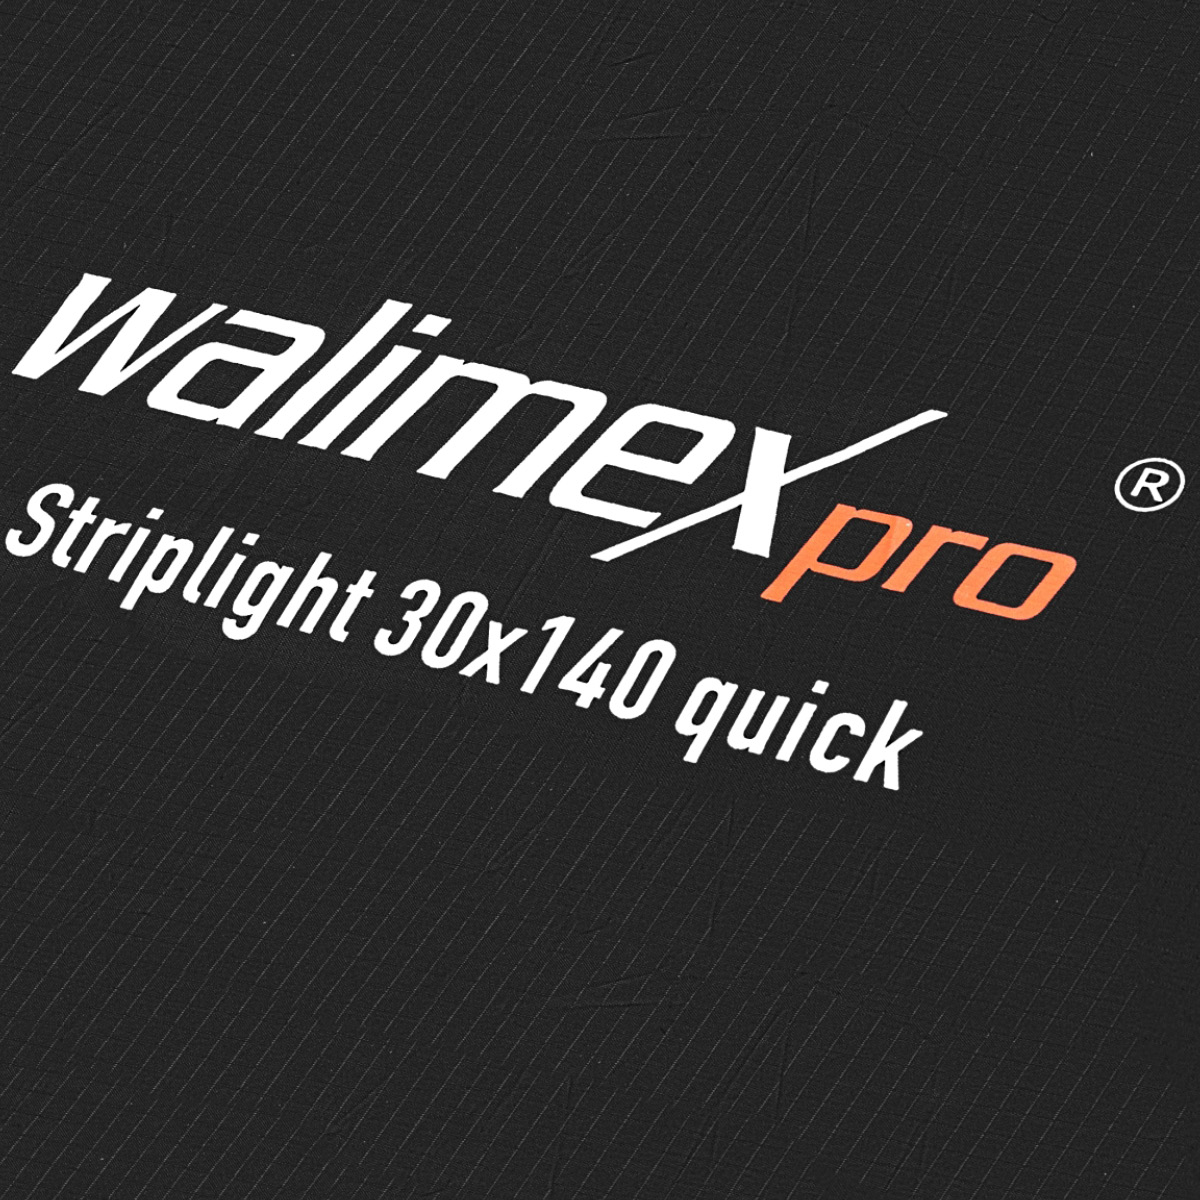 Walimex pro SL Striplight SB QA 30 x 140cm Broncolor